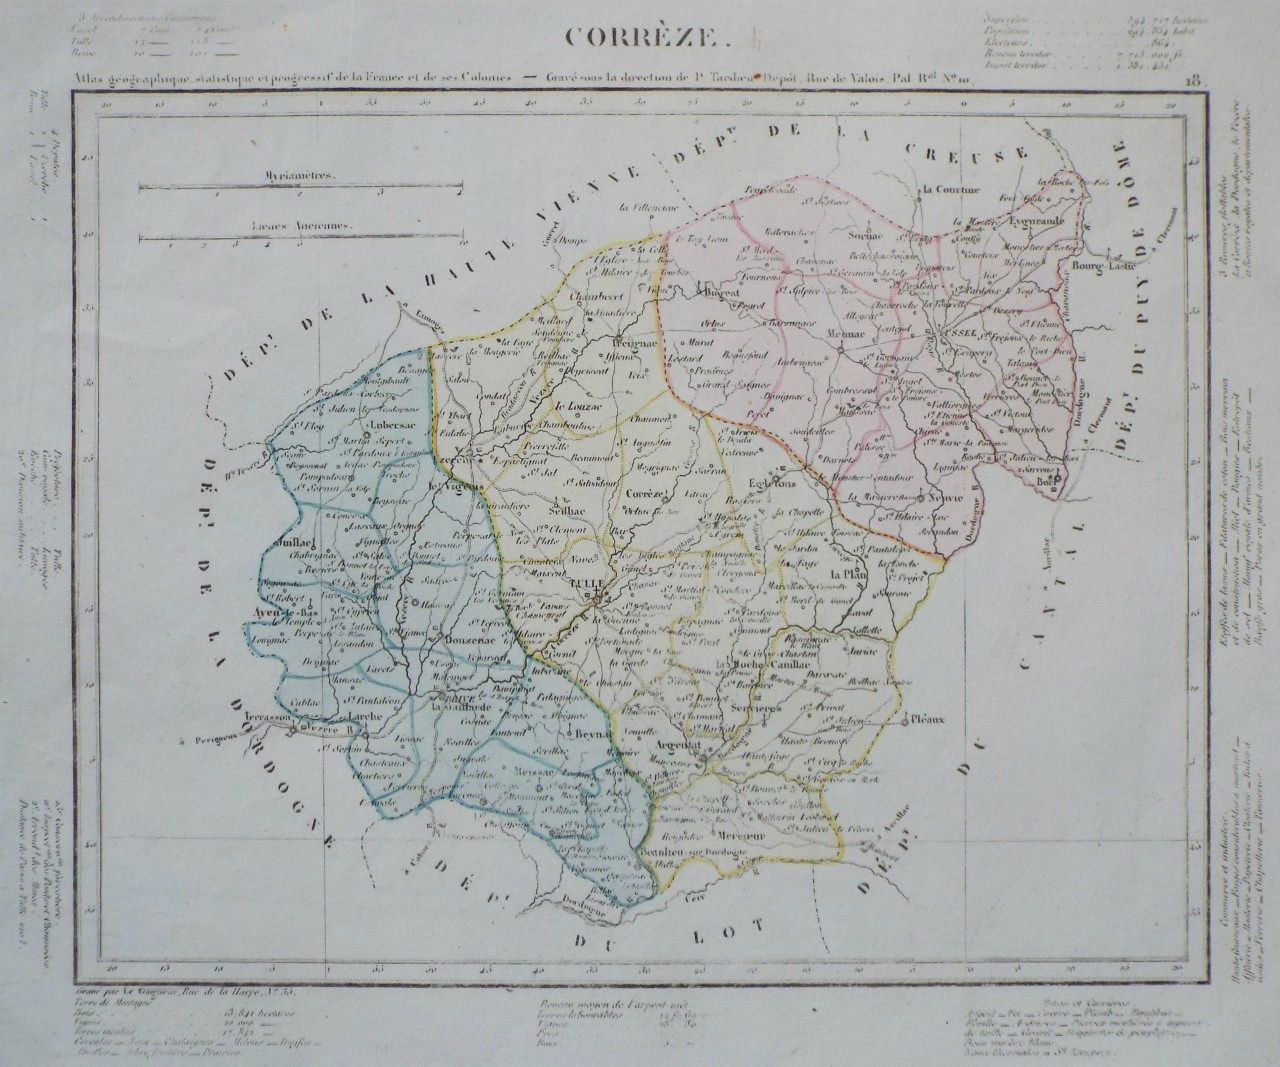 Map of Correze